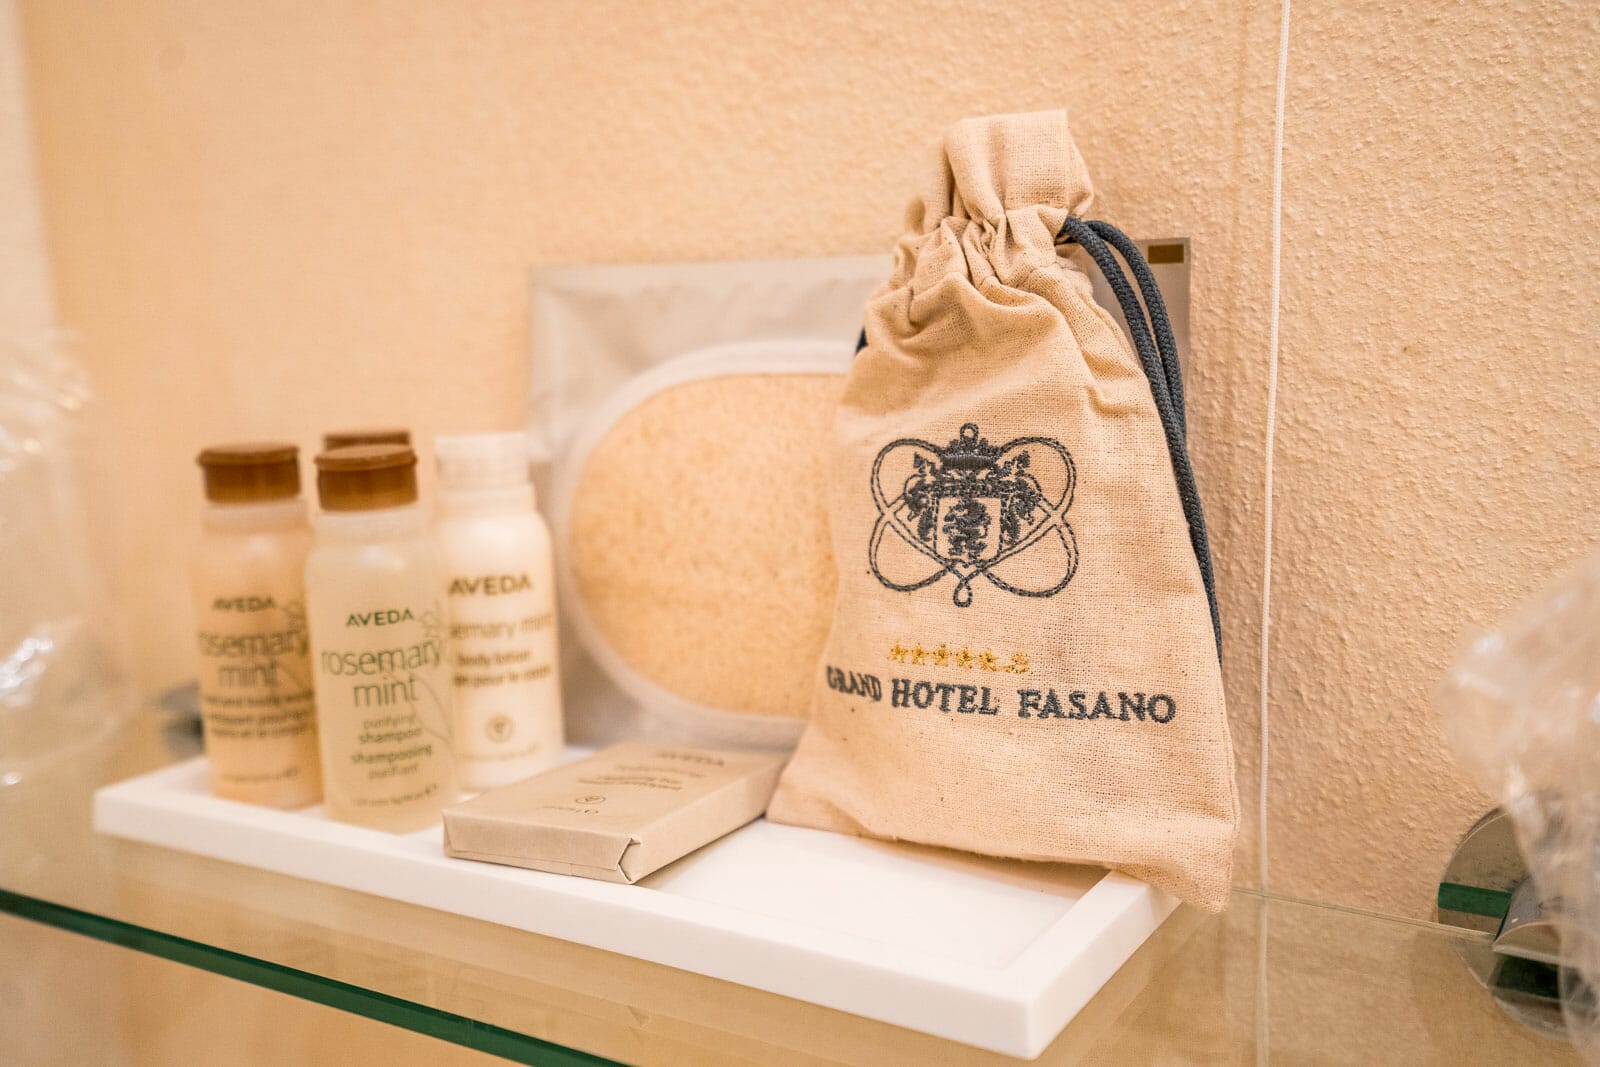 Bathroom amenities at Grand Hotel Fasano